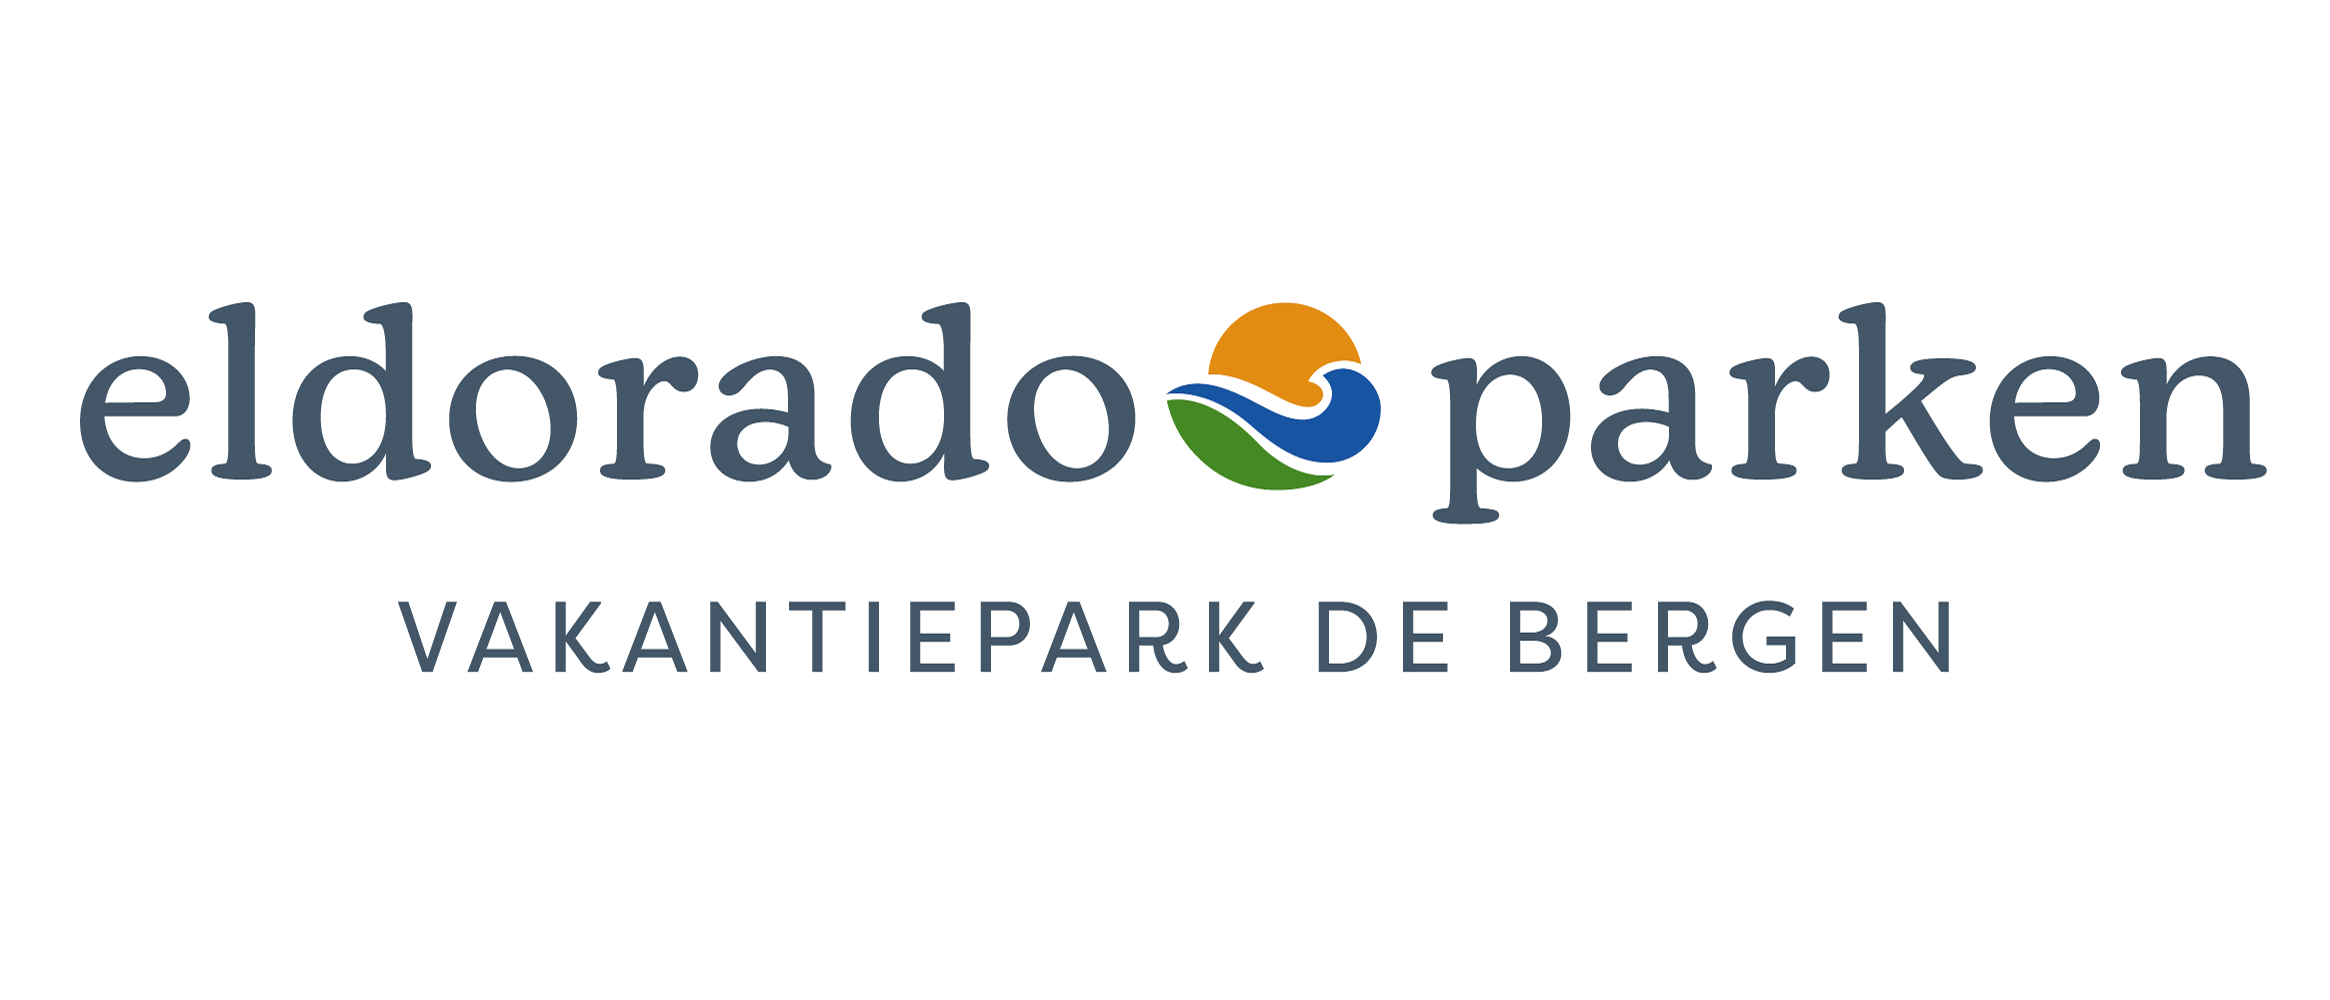 Eldoradoparken.nl/de-bergen